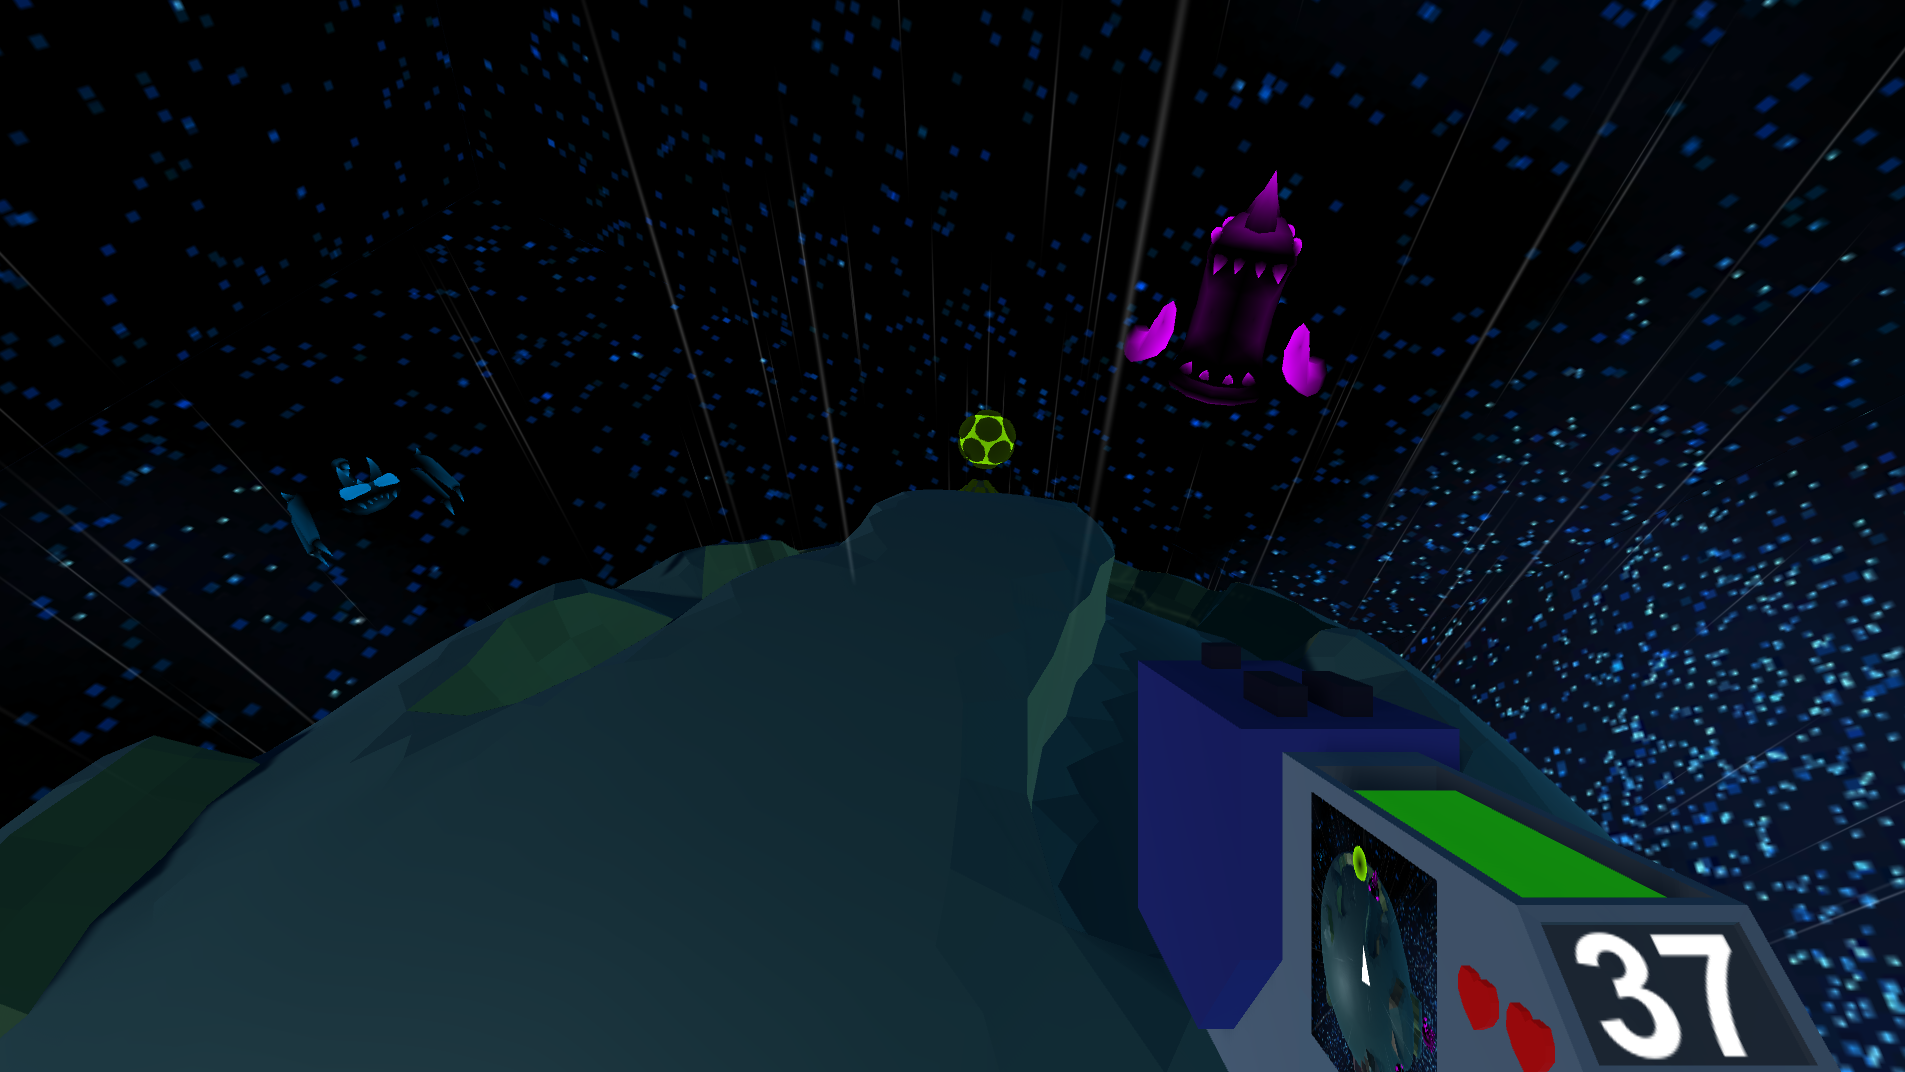 A screenshot of game play.